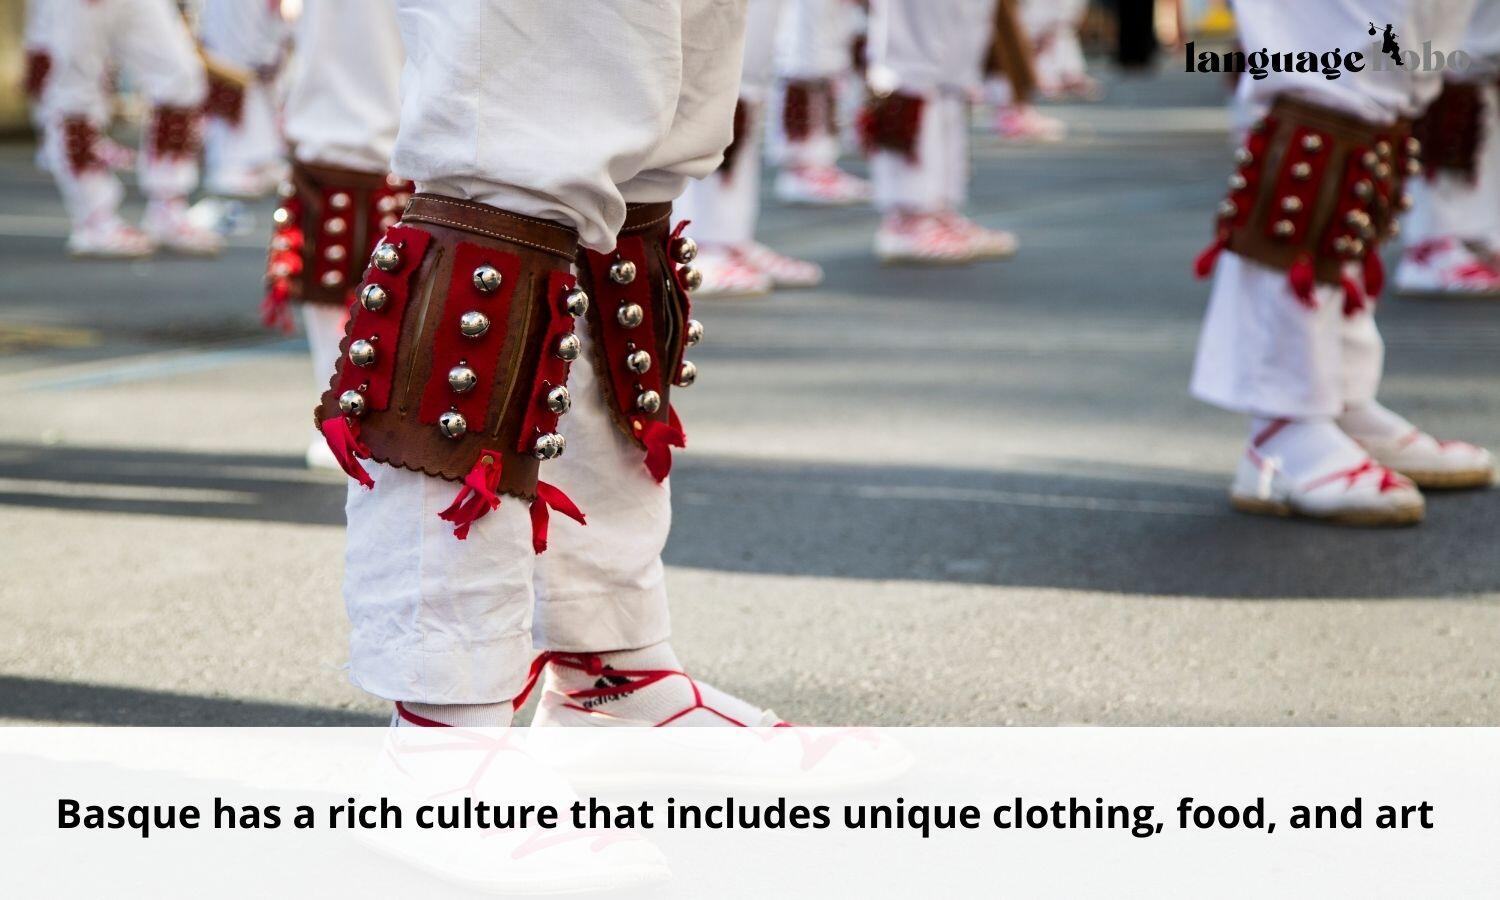 Basque has a rich culture